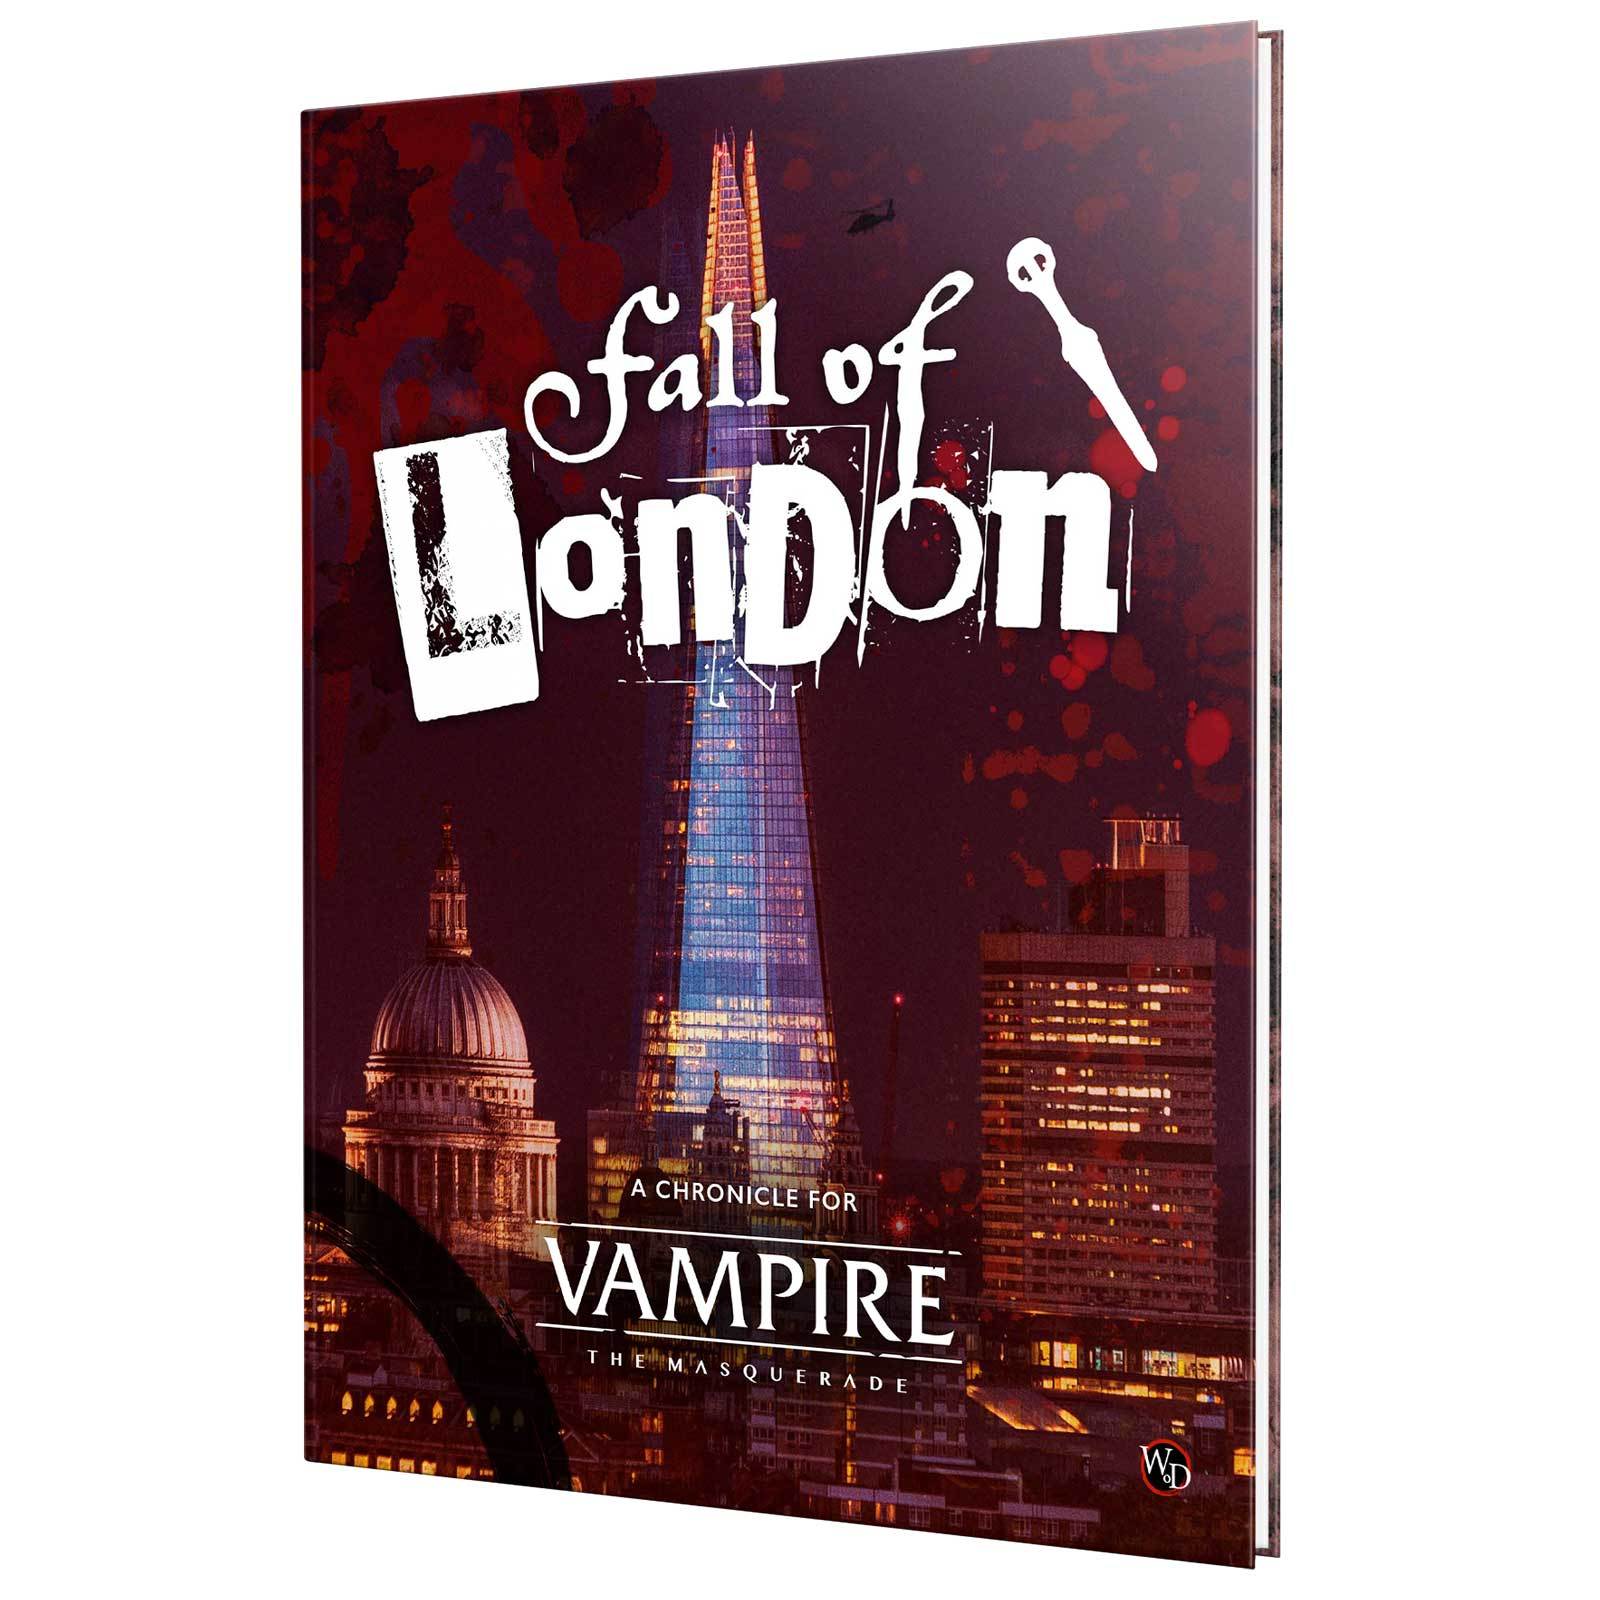 Vampire The Masquerade: Fall of London